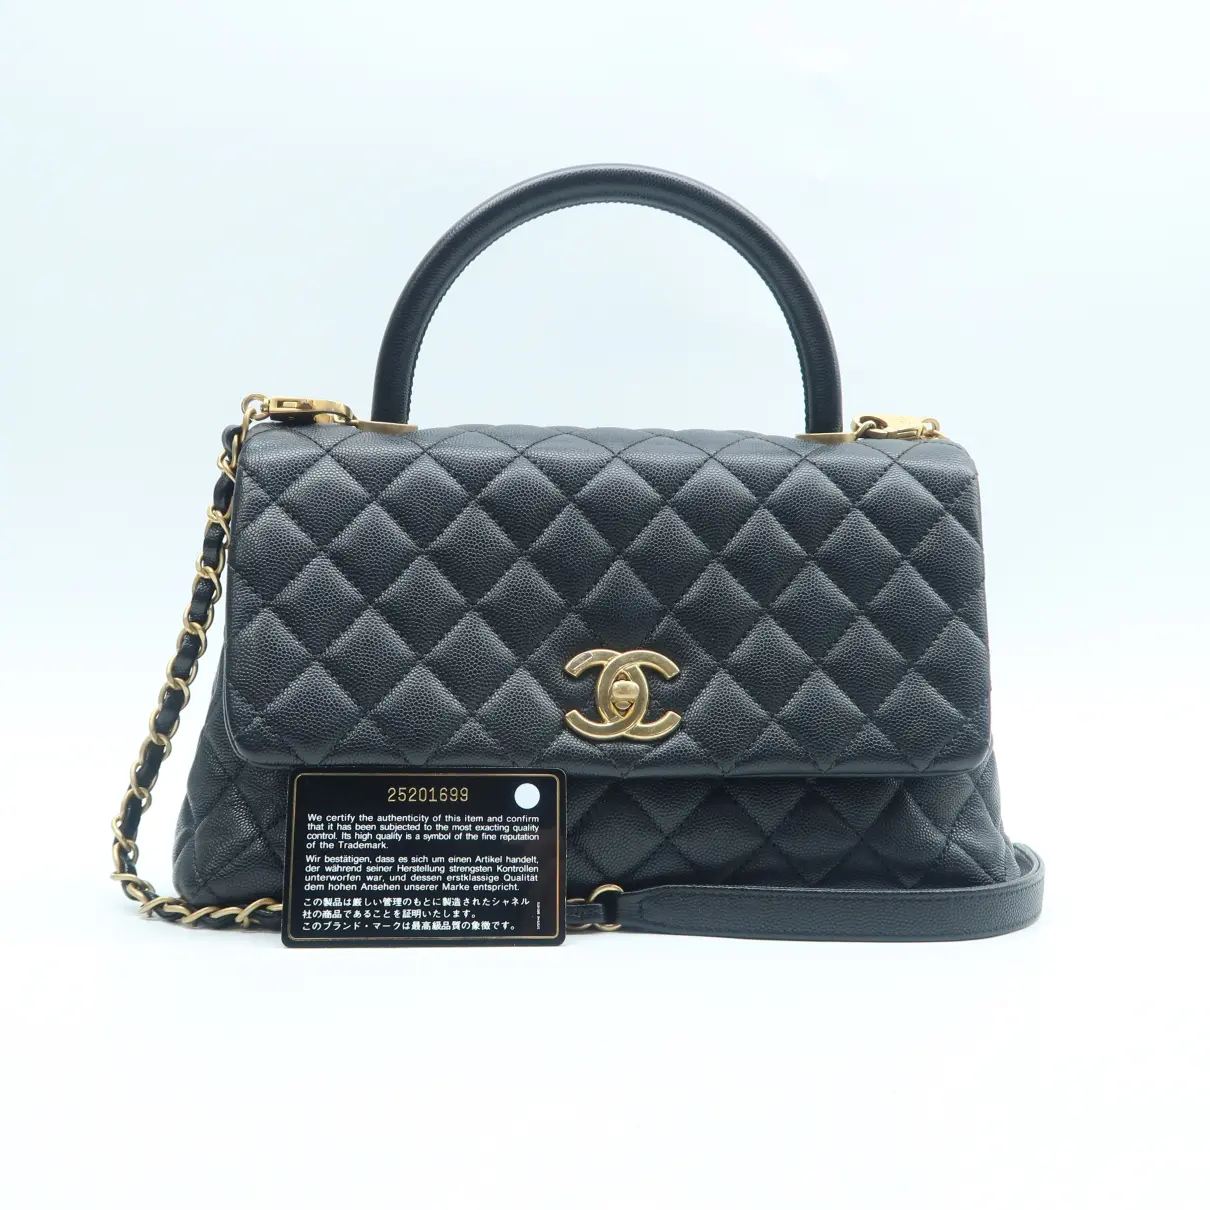 Buy Chanel Coco Handle leather satchel online